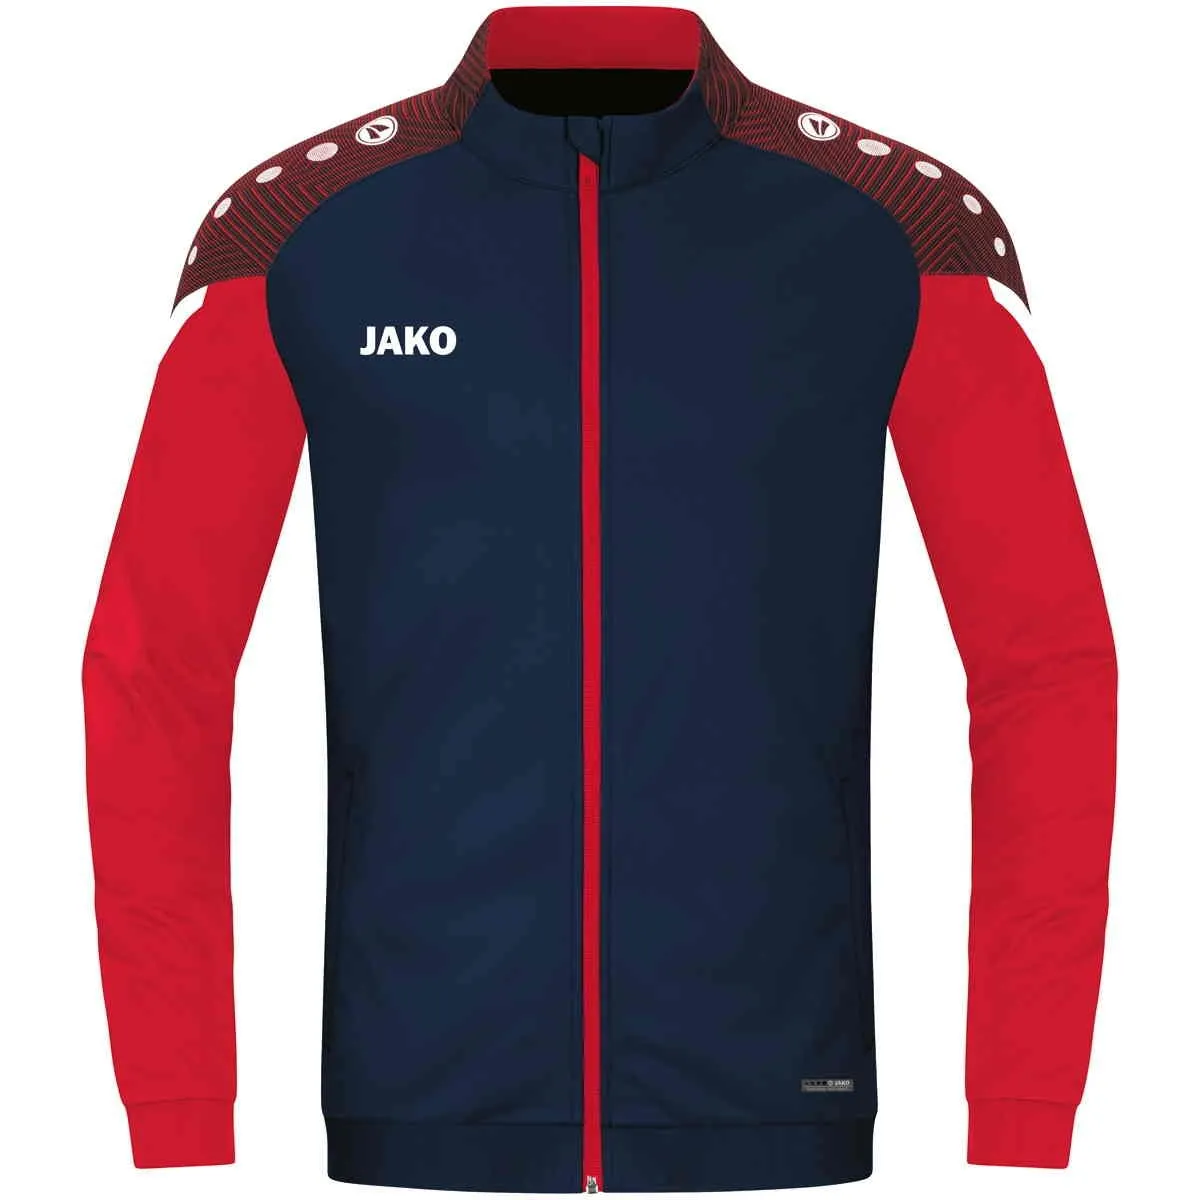 Jako polyester jacket Performance dark blue/red